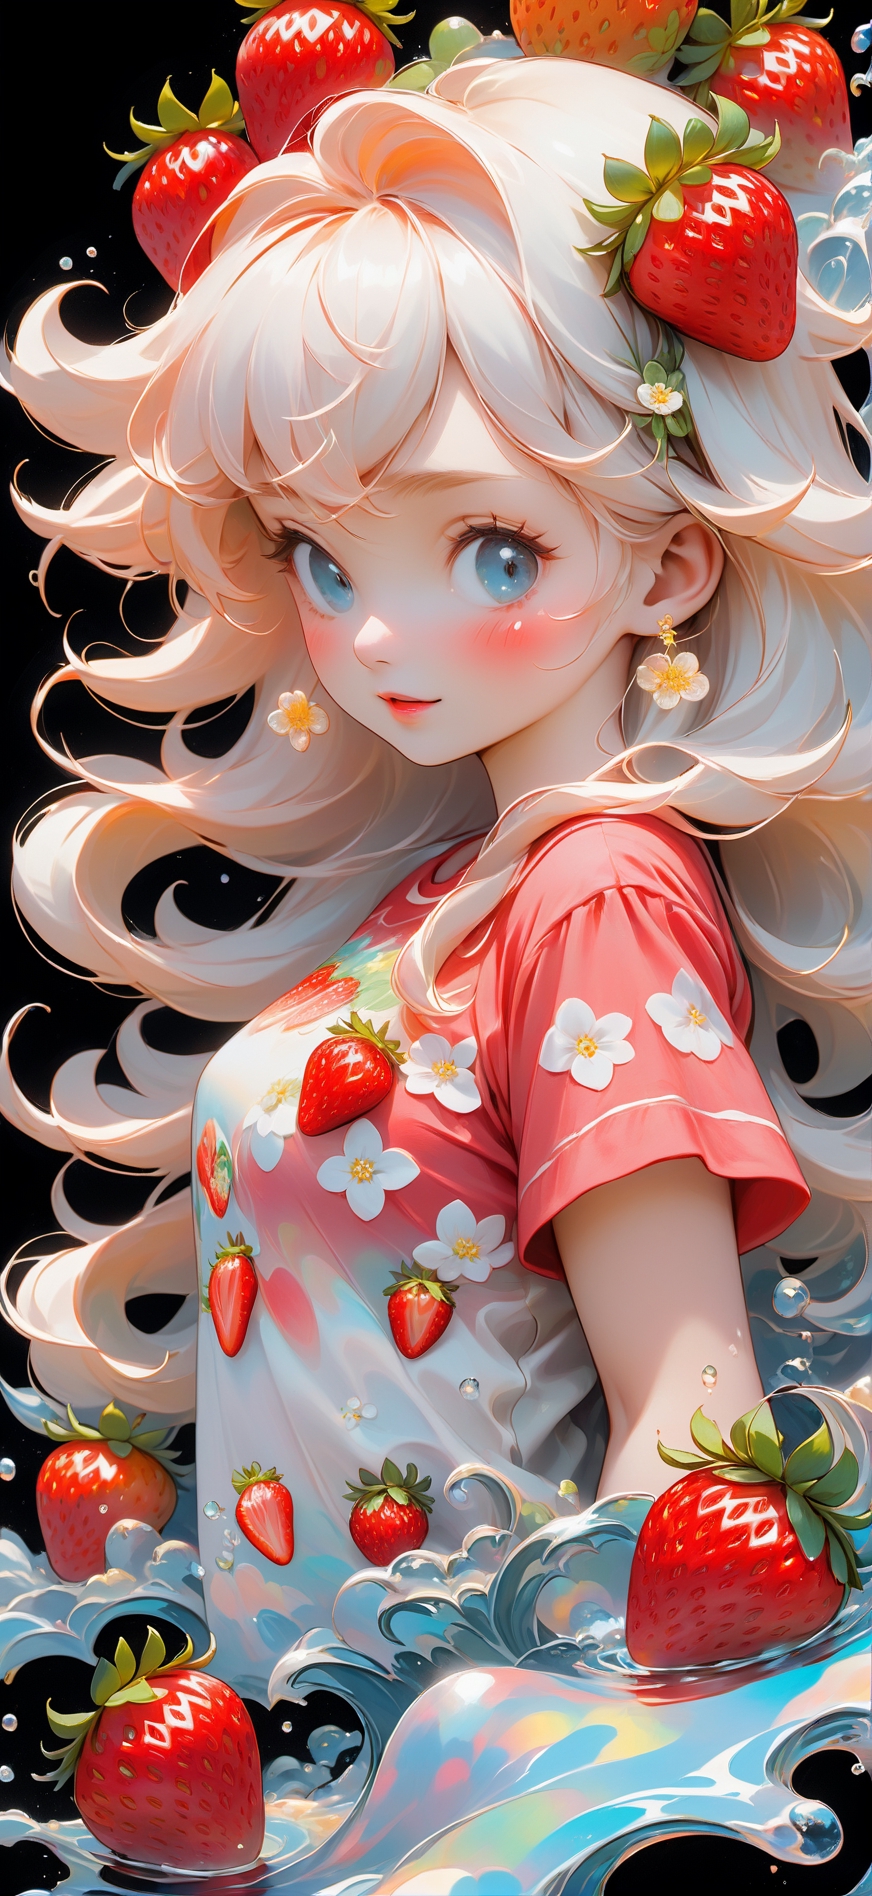 STRAWBERRY MILK KAWAII FACE ANIME KAOMOJI EMOTICON CARTOON - Strawberry  Milk Kawaii Face Anime Kaomo - Posters and Art Prints | TeePublic